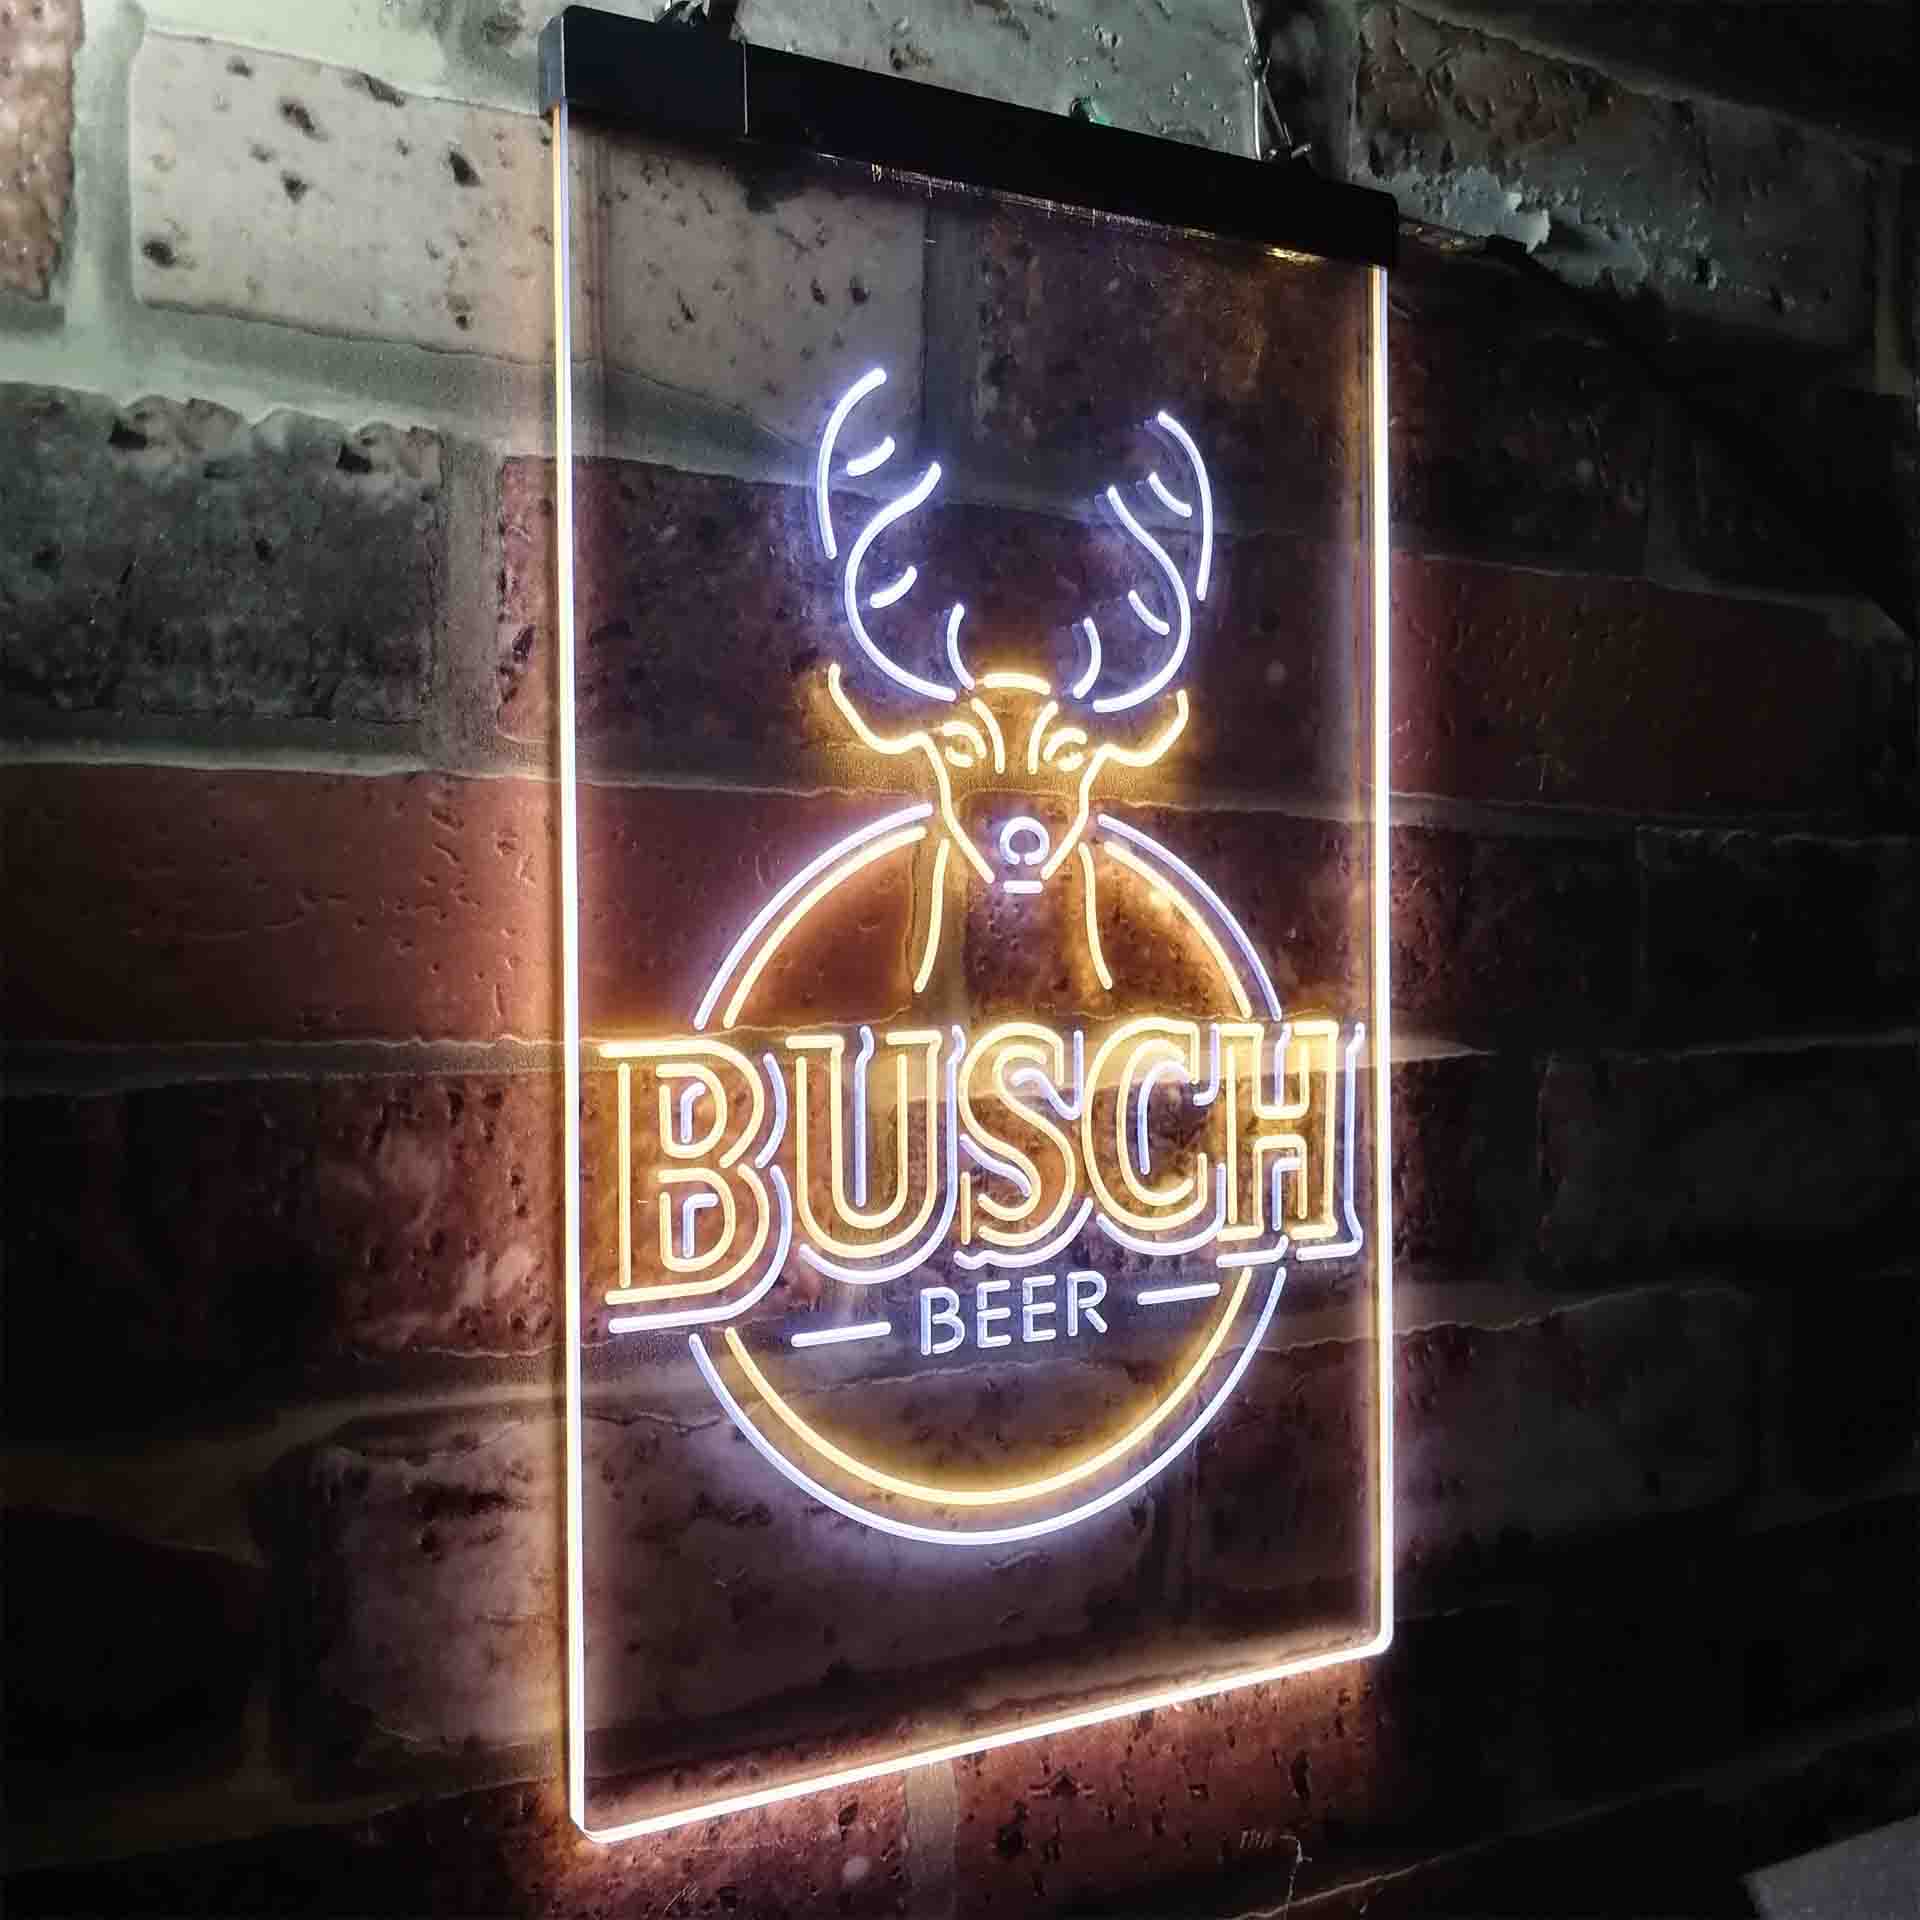 Buschs Beer Deer Vertical Circle LED Neon Sign